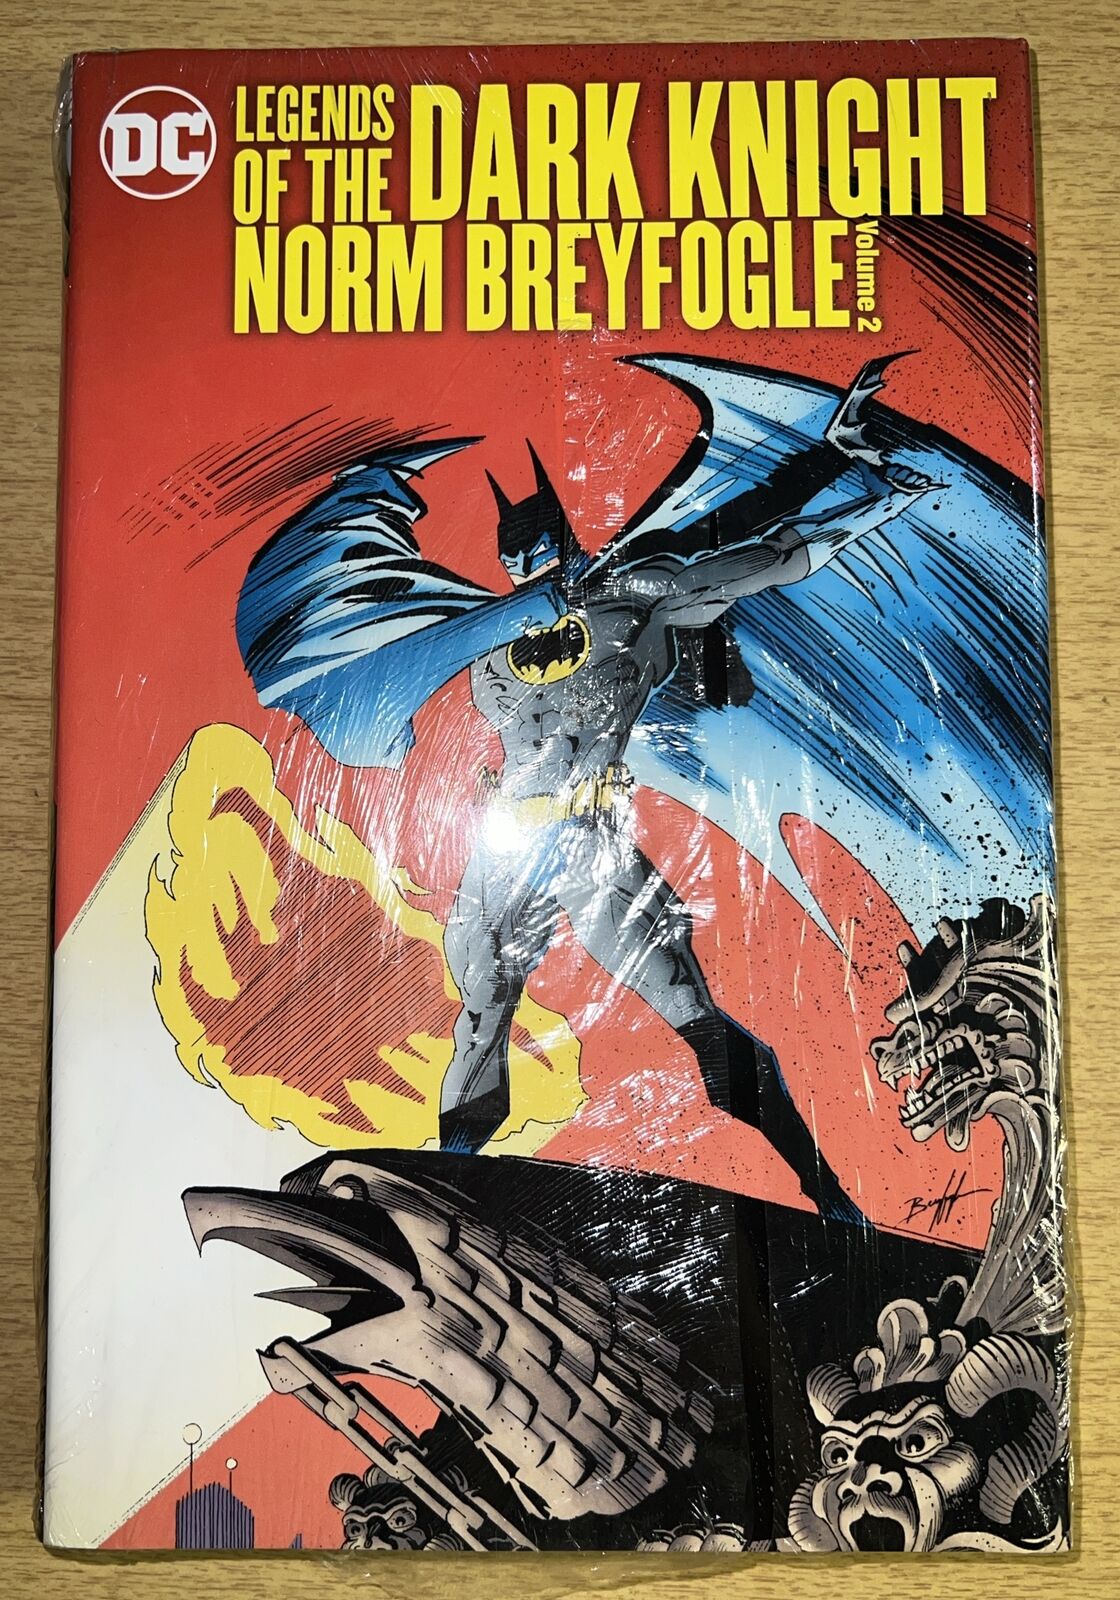 Legends Of The Dark Knight - Vol. 2 - Art: N. Breyfogle - Hardcover - Sealed